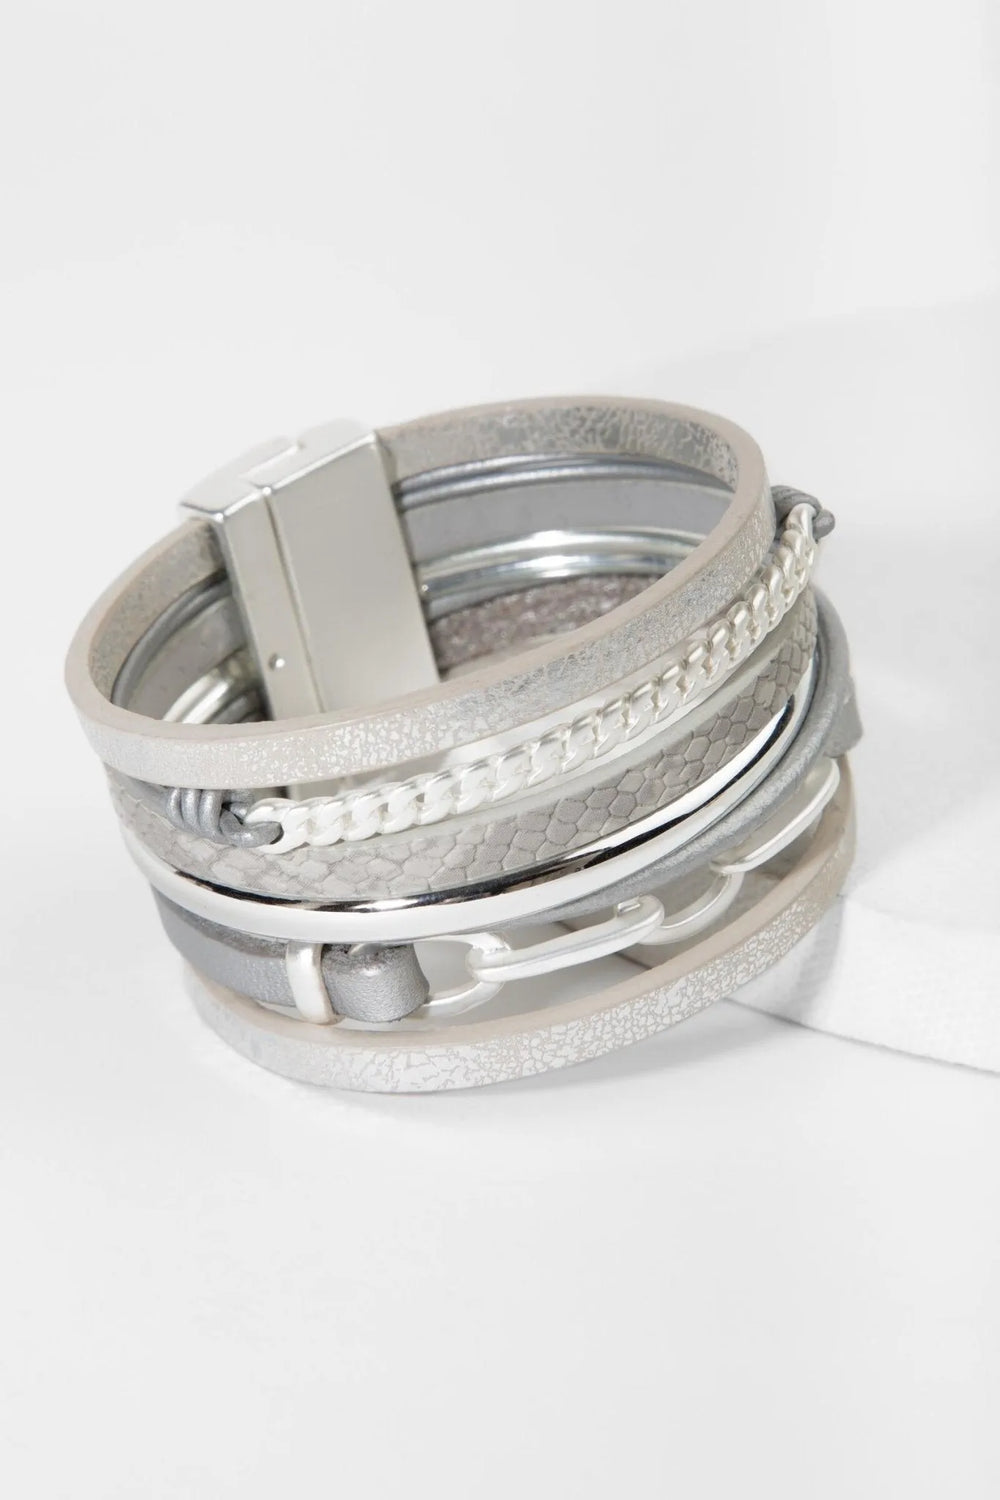 Brink Chain Link Leather Bracelet Silver